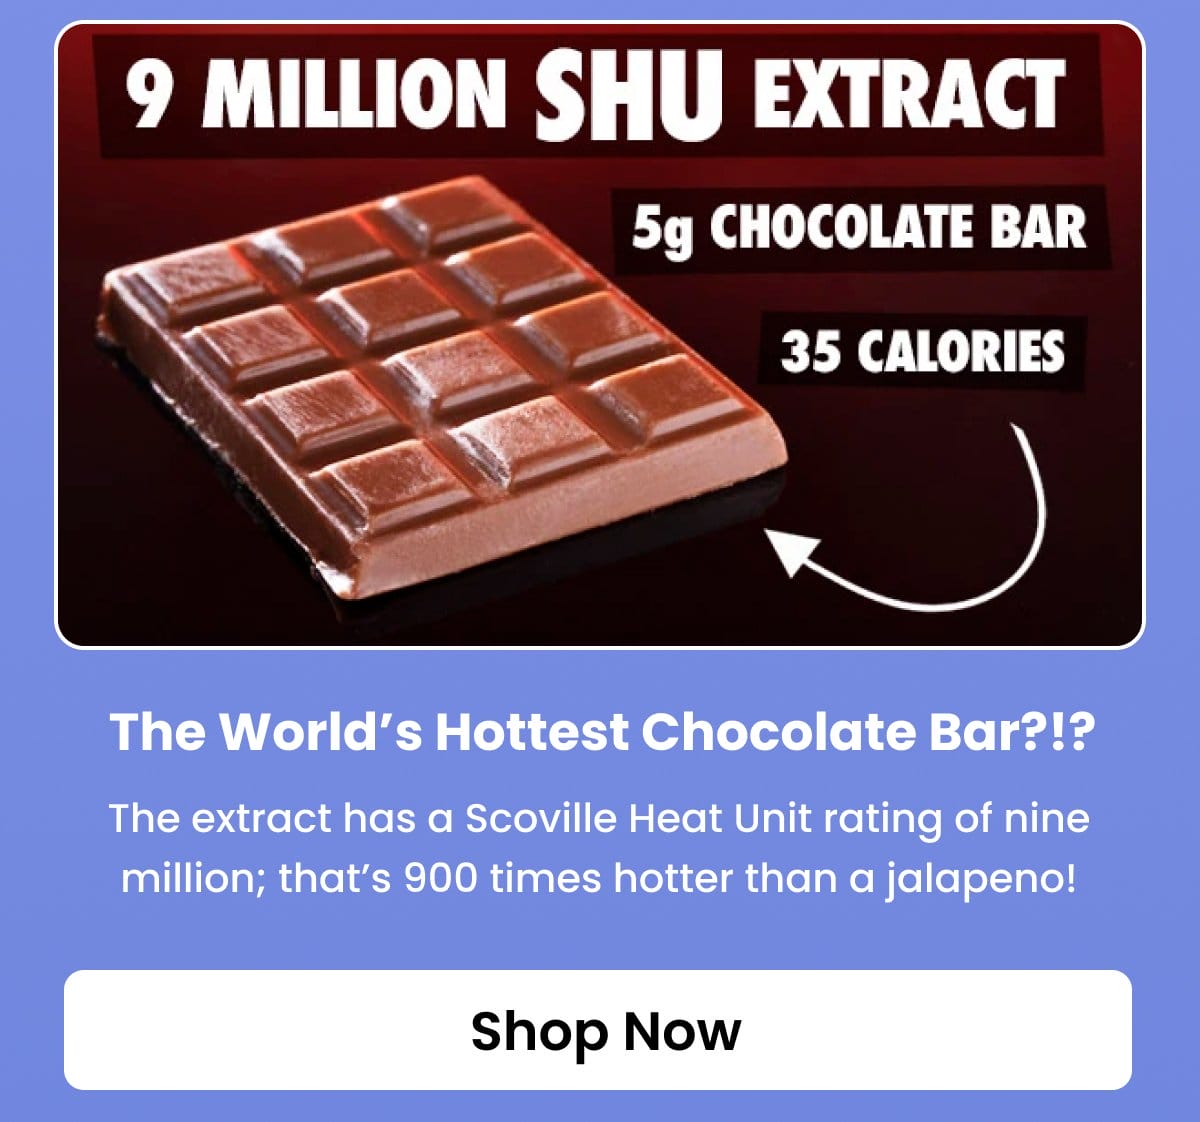 The World's Hottest Chocolate Bar!